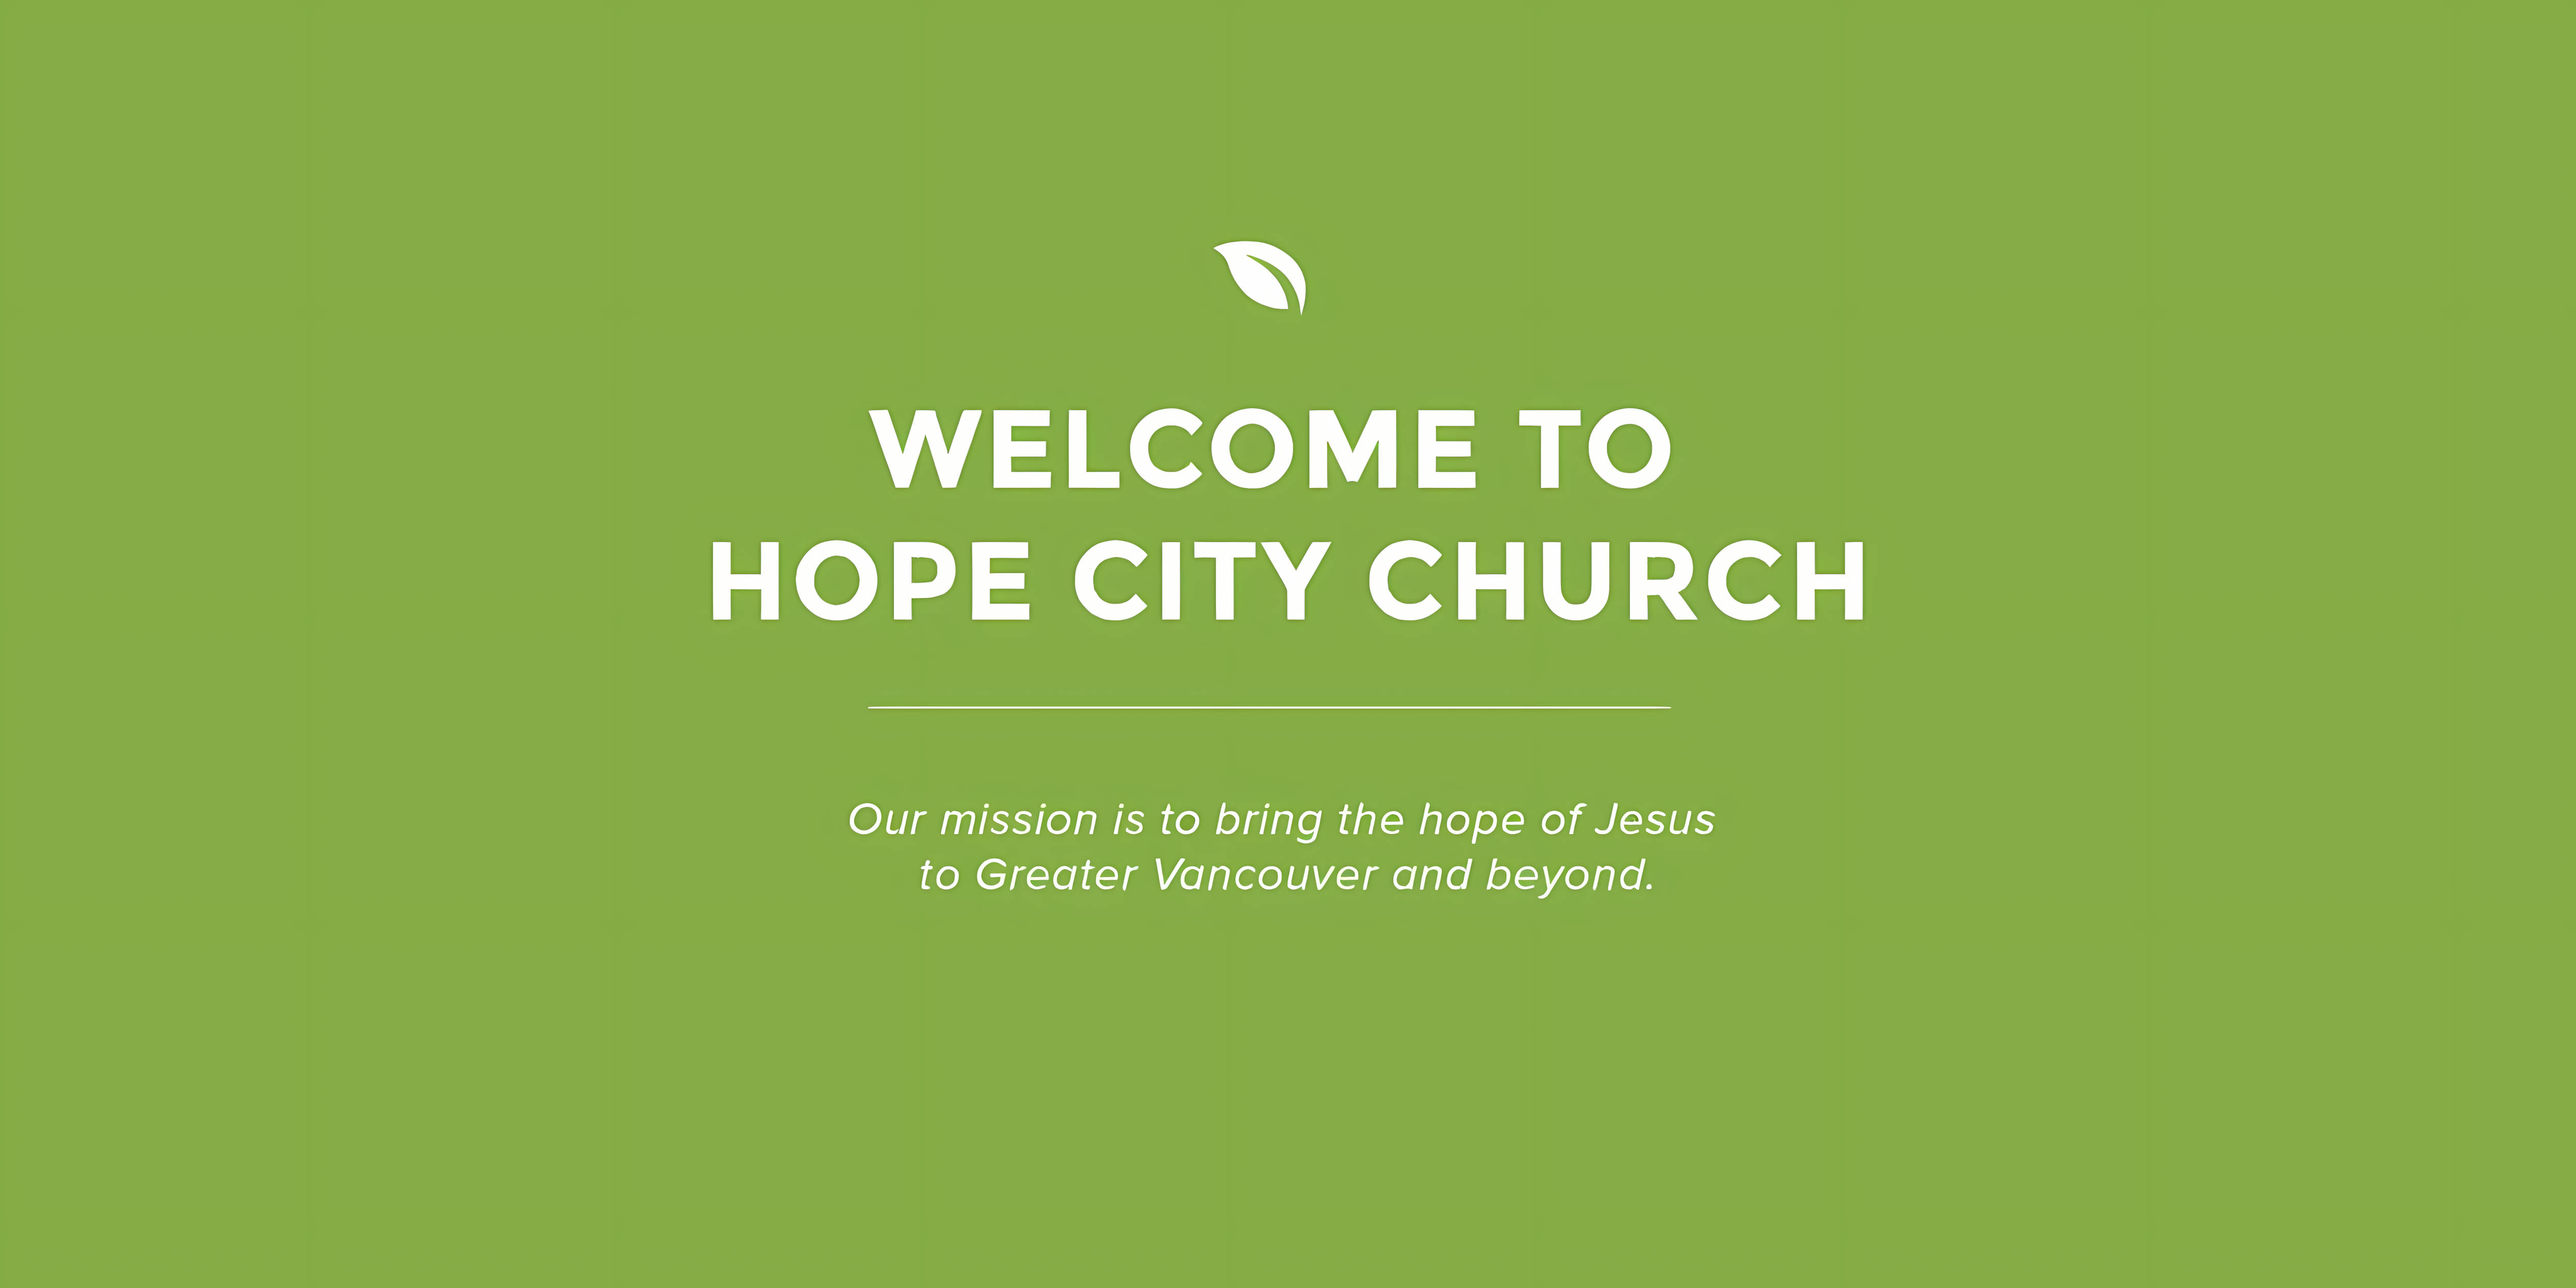 Welcom to Hope City Church